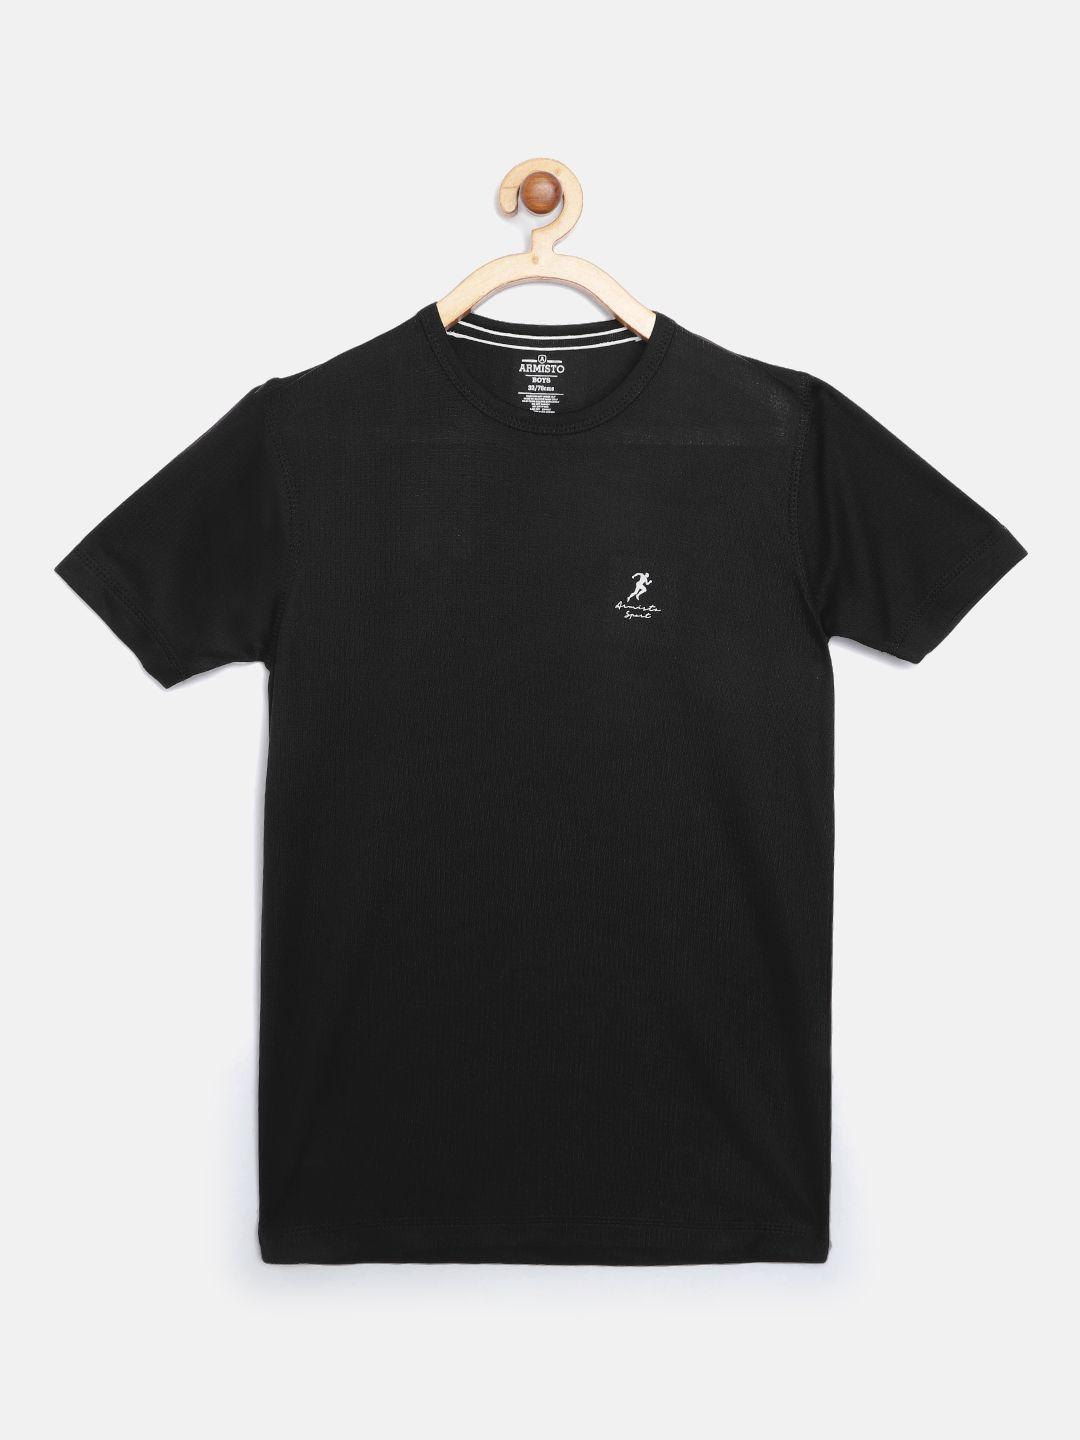 armisto-boys-black-solid-dri-fit-badminton-t-shirt